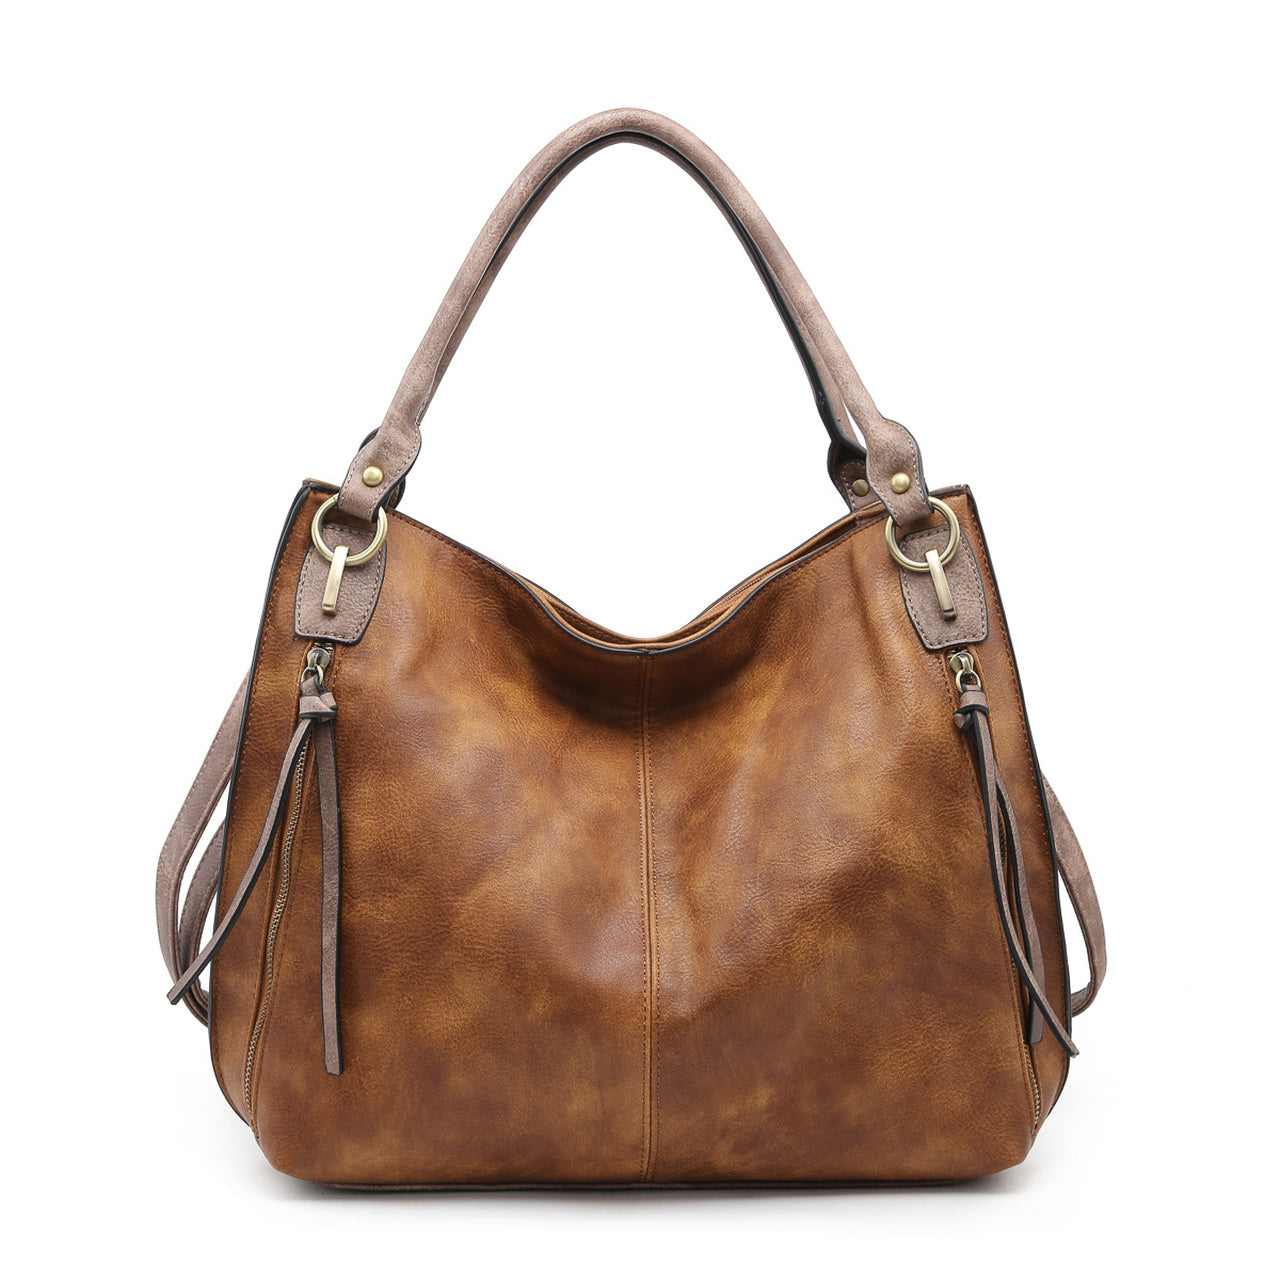 Return to Tiffany™ Mini Tote Bag in Tiffany Blue Leather | Tiffany & Co.